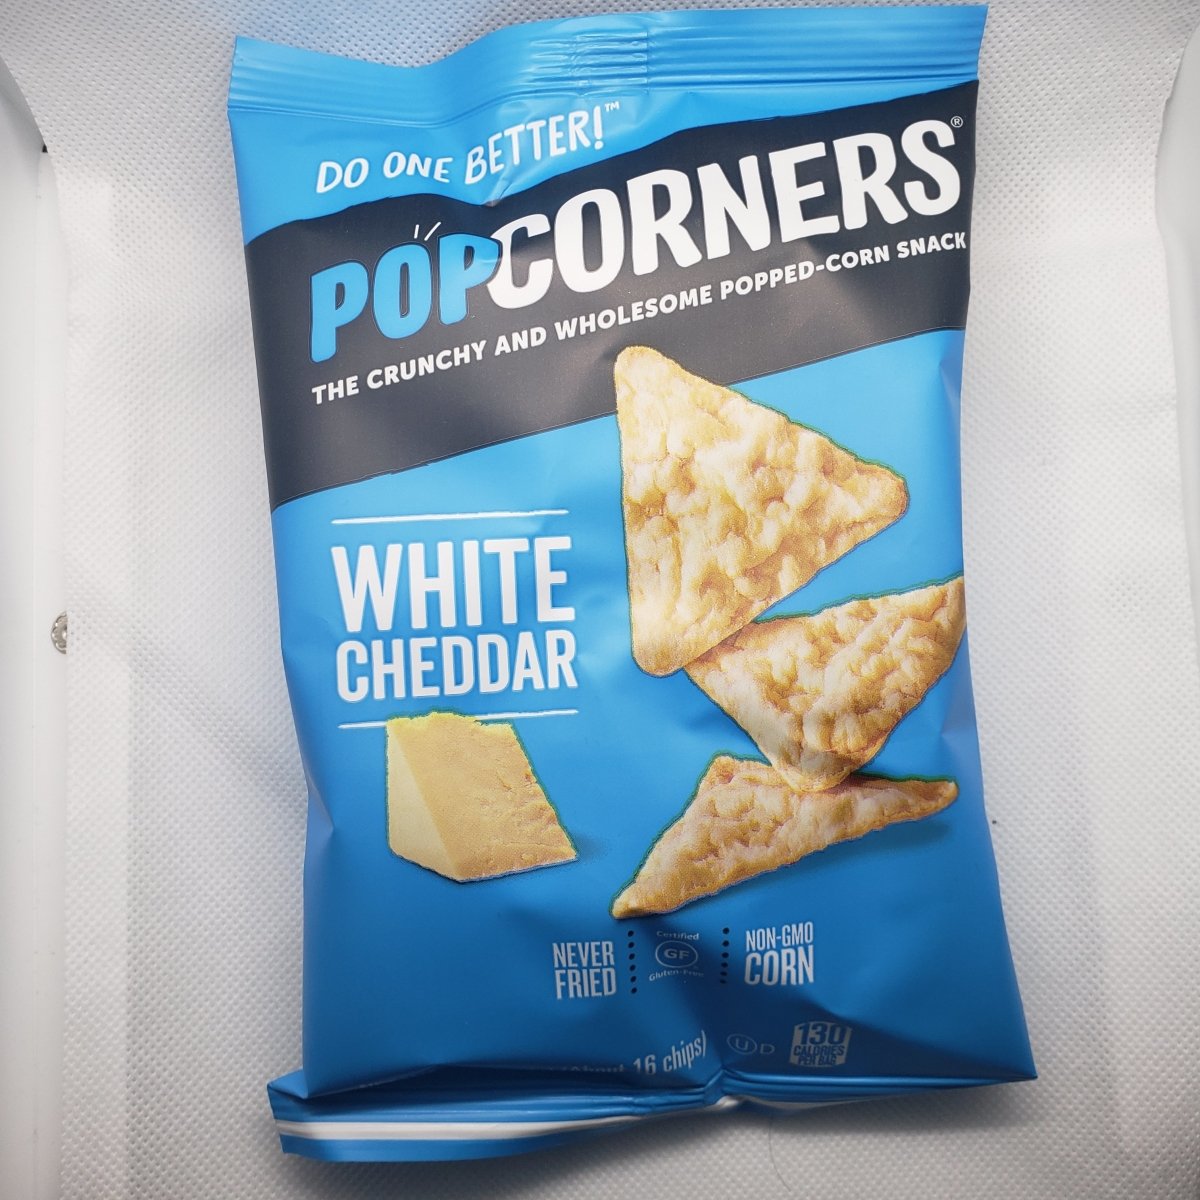 Pop Corners - White Cheddar - Popped-Corn Snack - 1oz